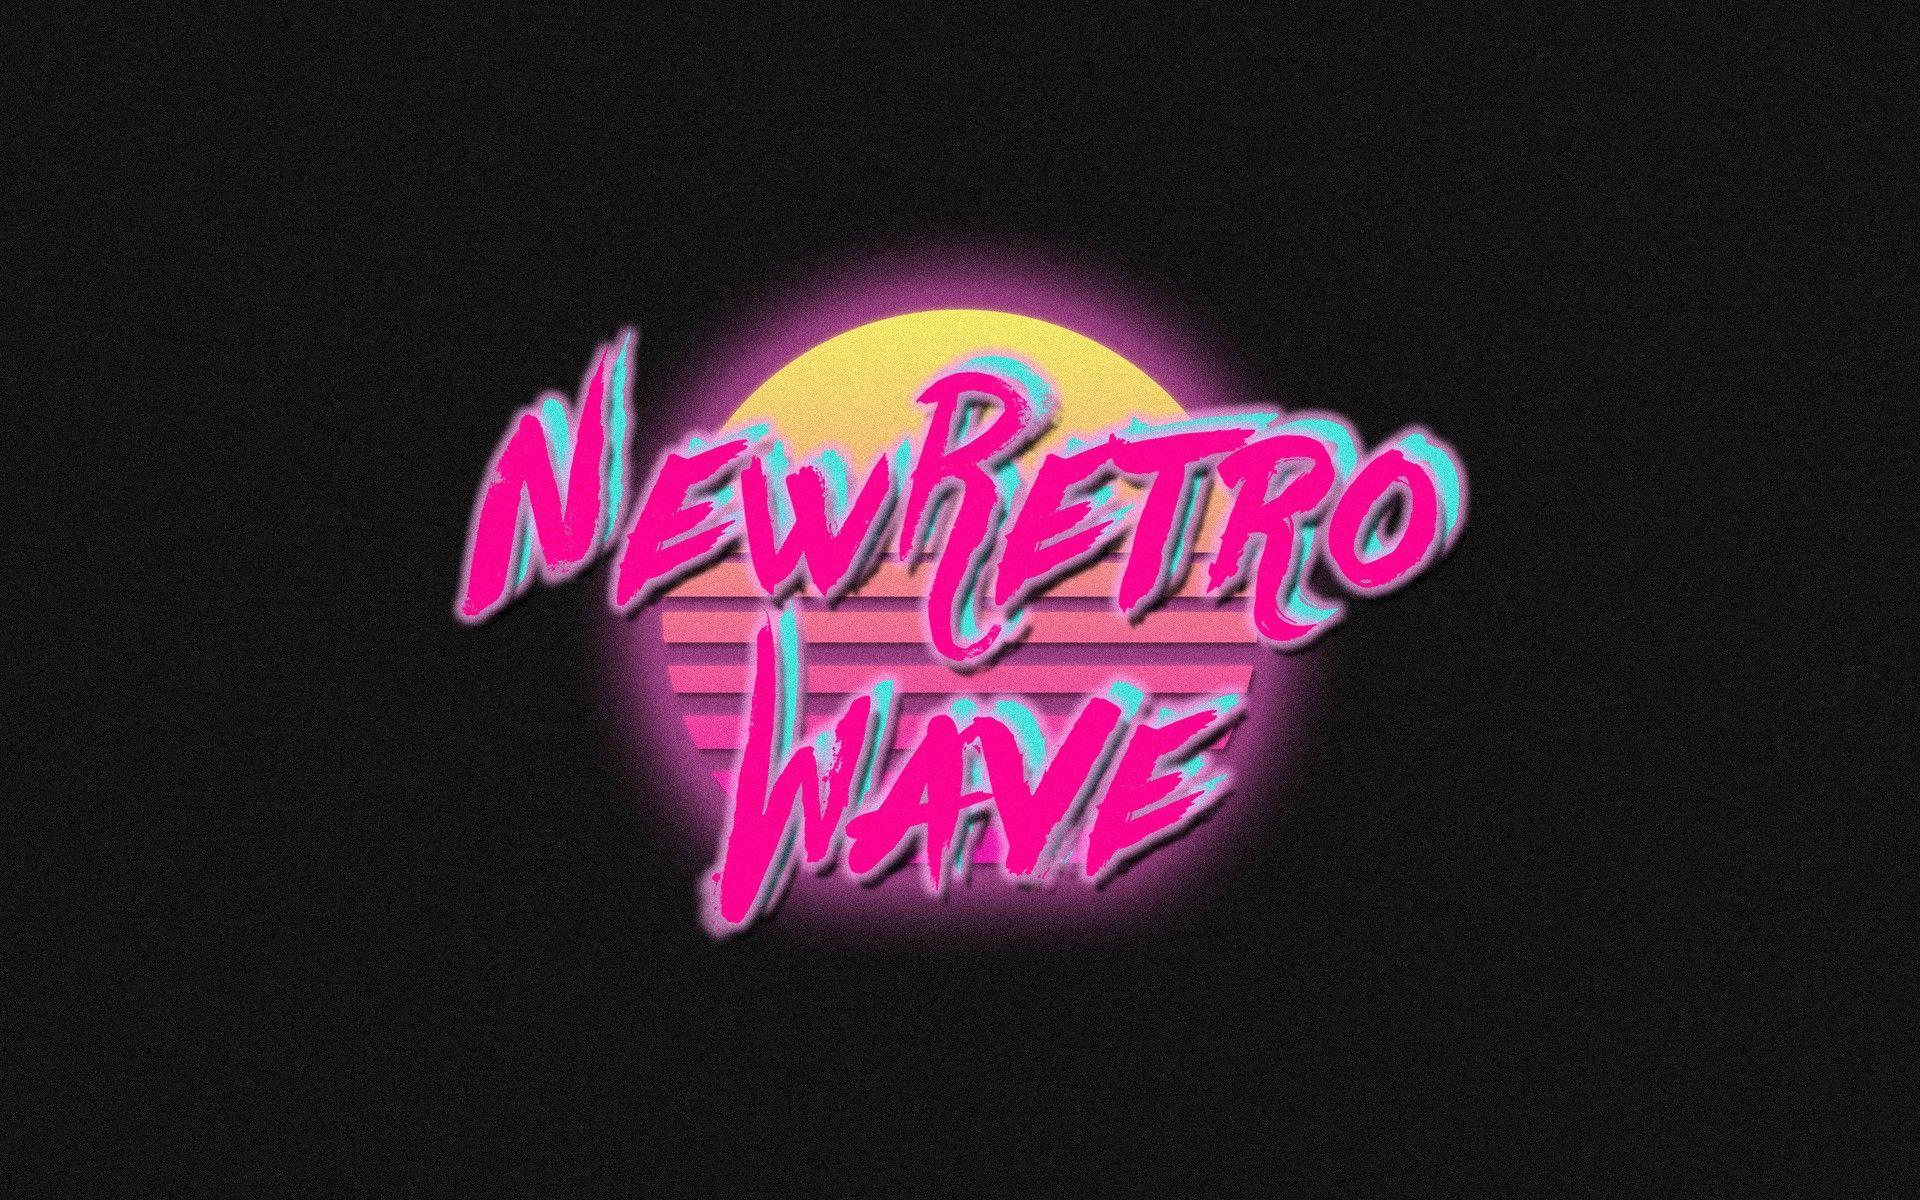 vintage, neon, New Retro Wave, synthwave, retro games, 1980s